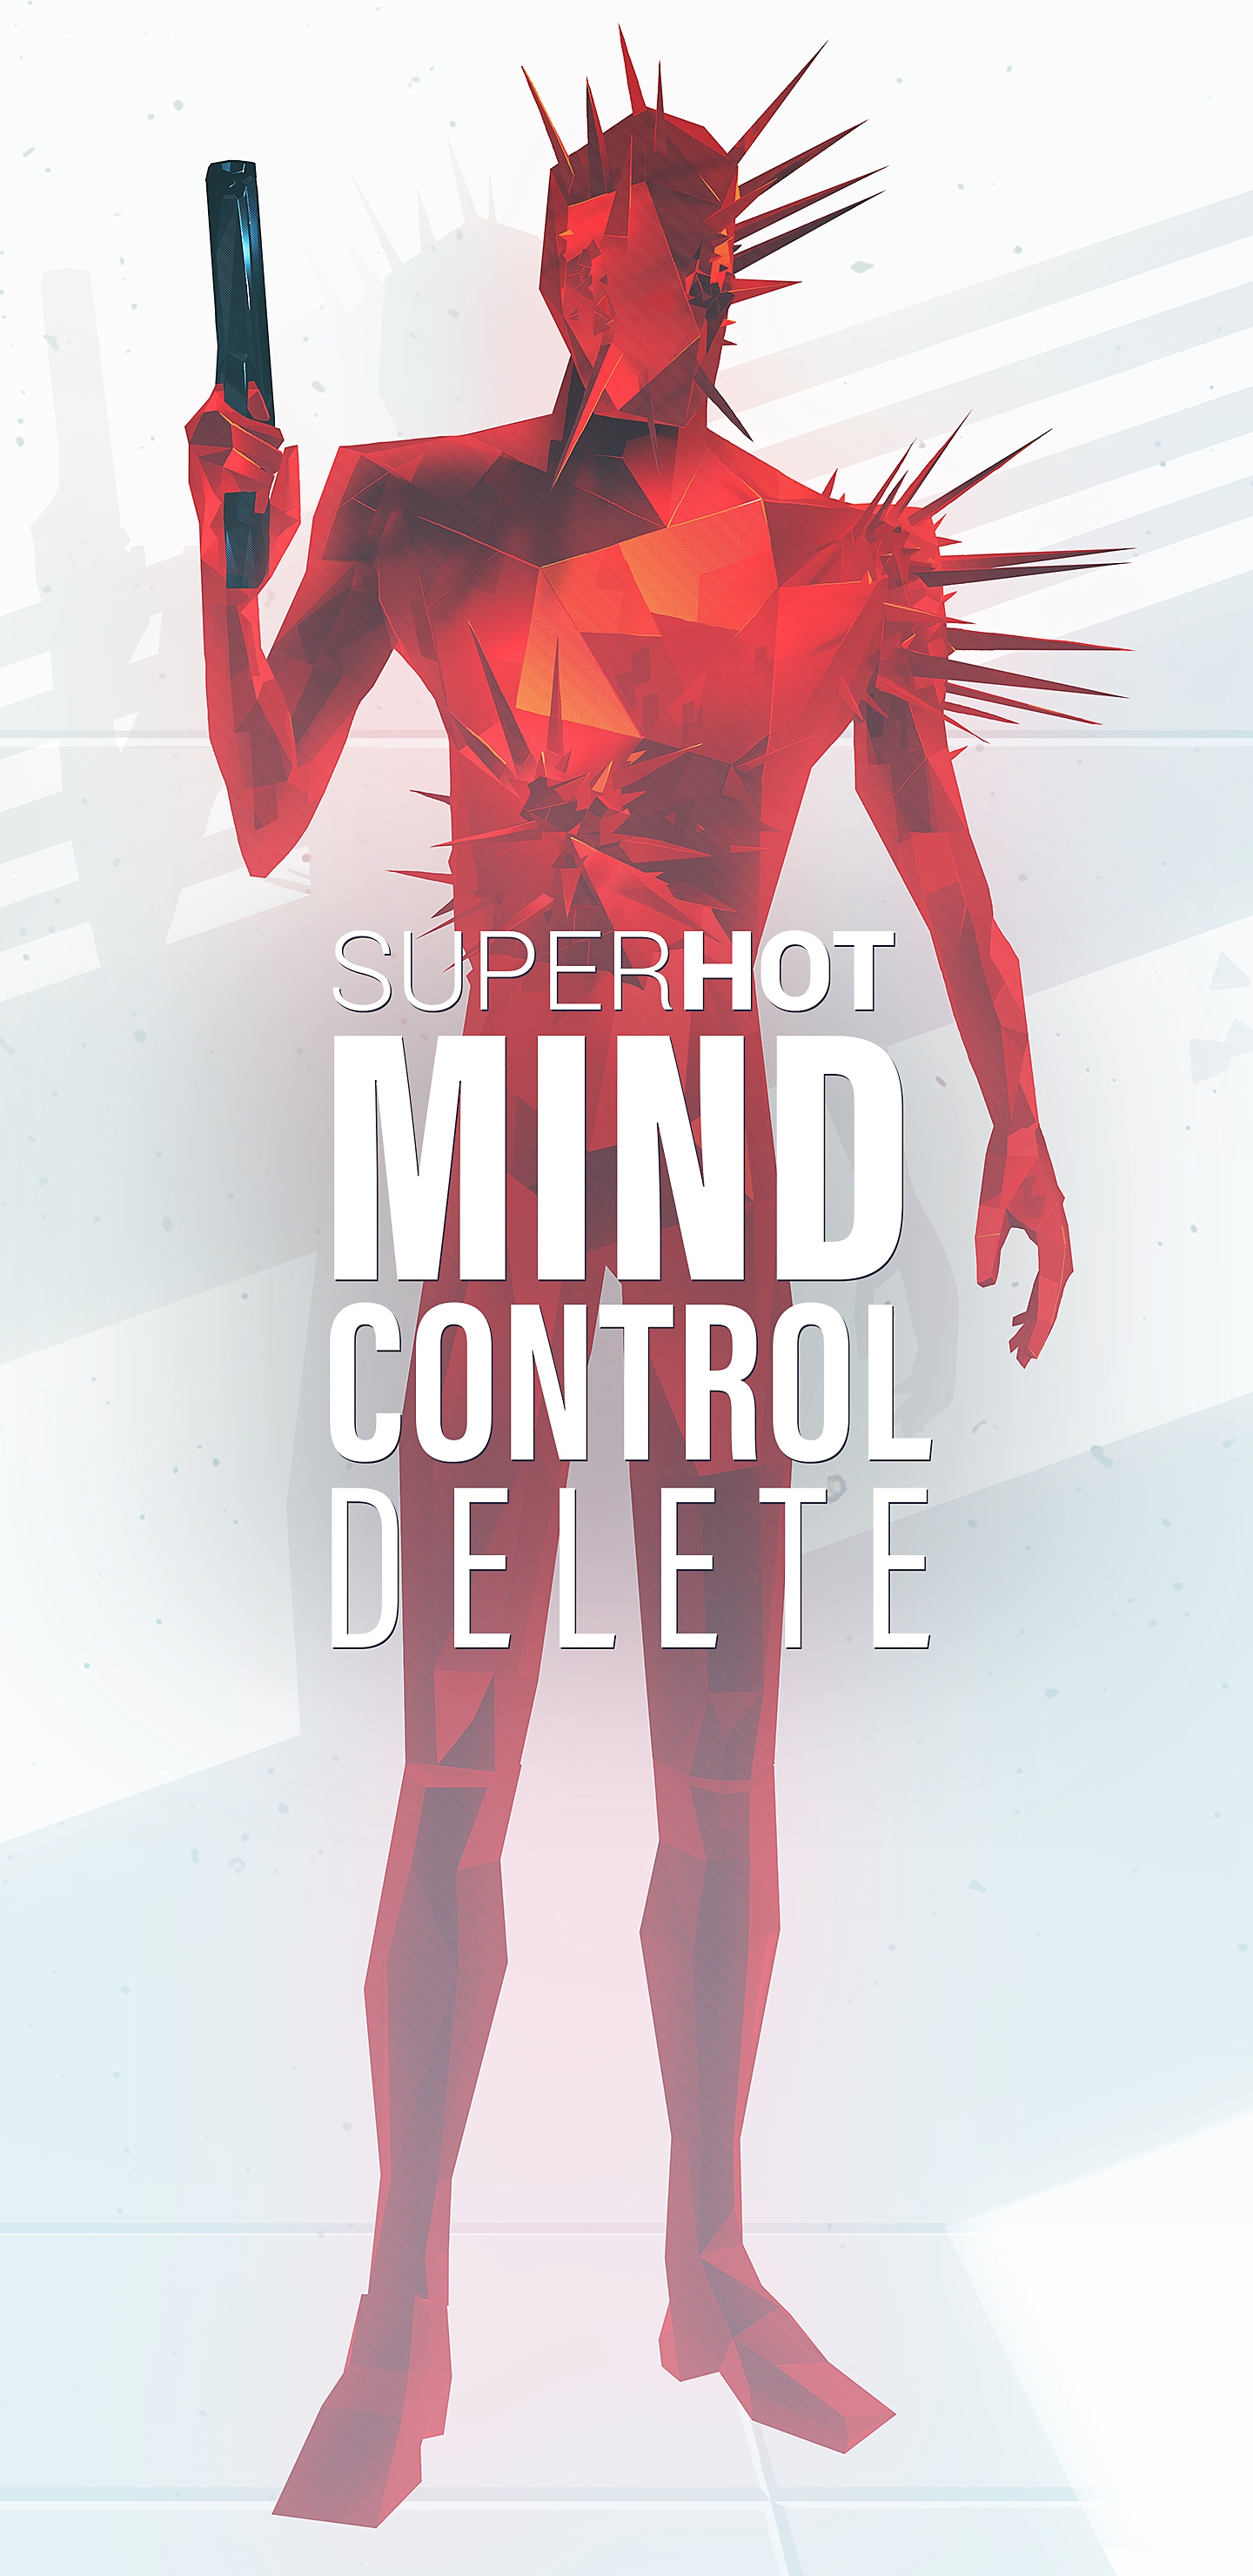 SUPERHOT: MIND CONTROL DELETE, mobilni uređaj